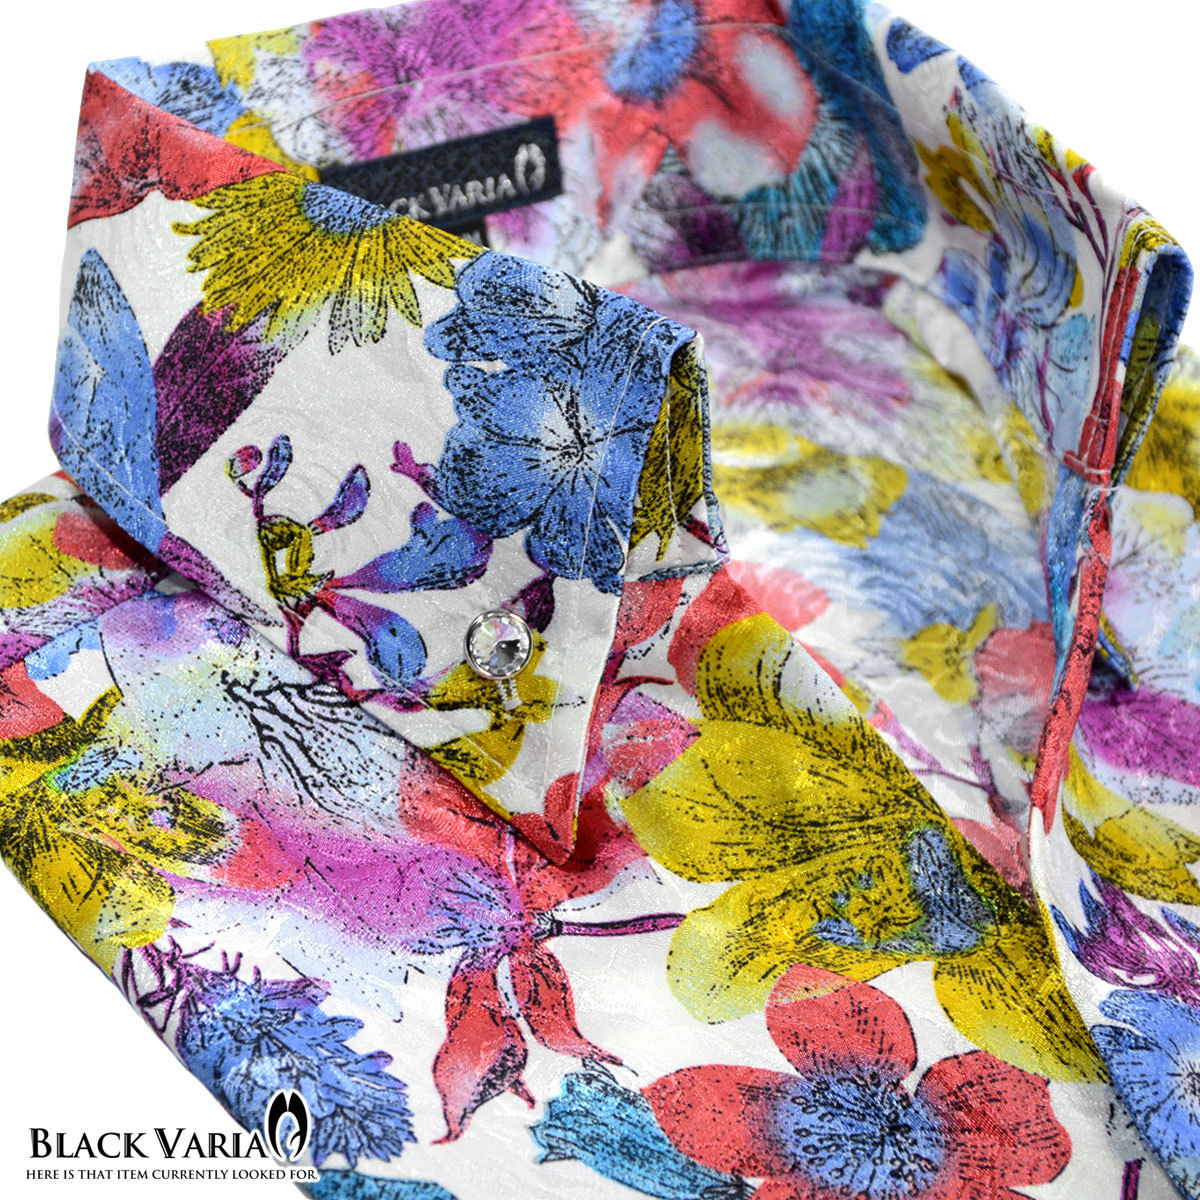 6#935171-wh BLACK VARIA マルチ花柄 スキッパードレスシャツ サテンジャガード スリム メンズ(ホワイト白×ブルー青レッド赤) M 日本製